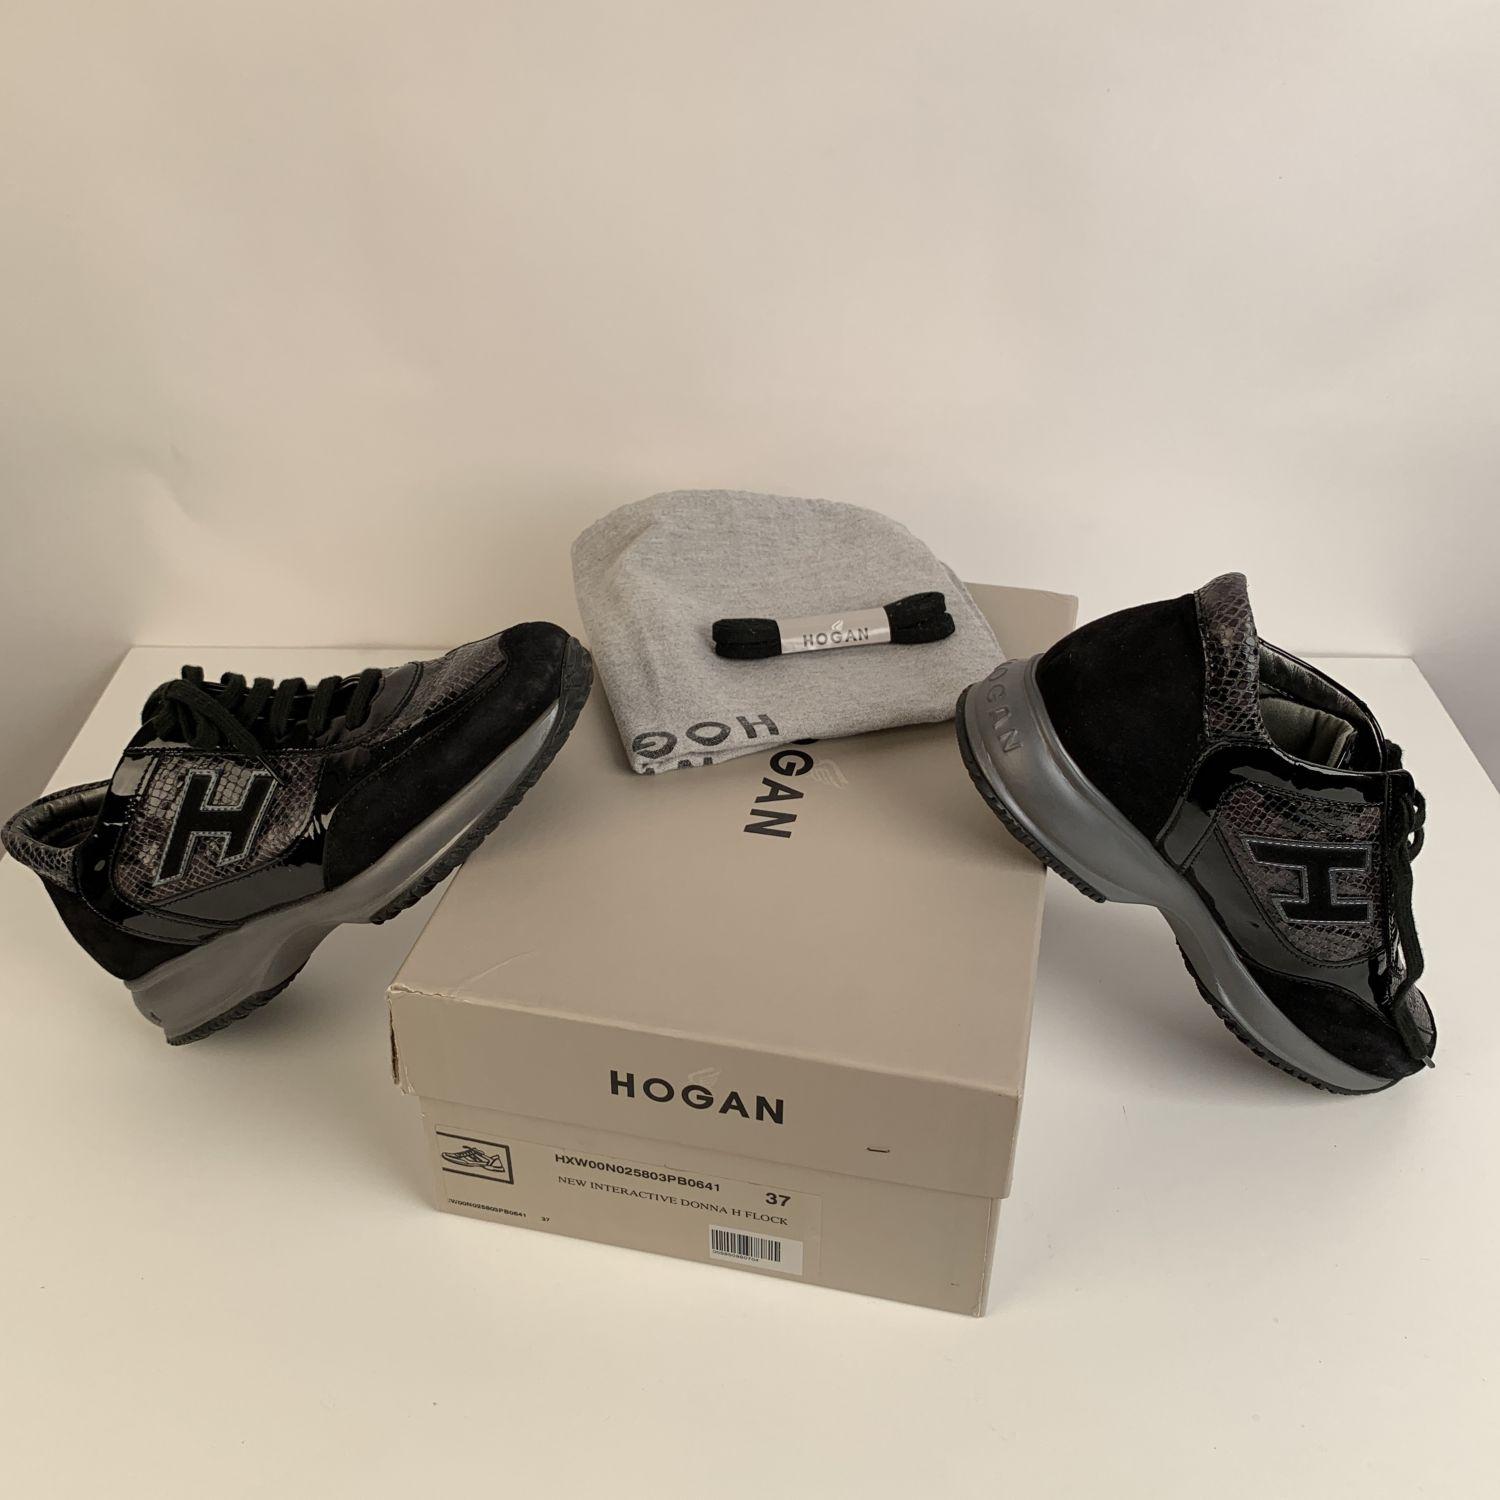 Hogan Black Suede Interactive H Flock Sneakers Shoes Size 37 5